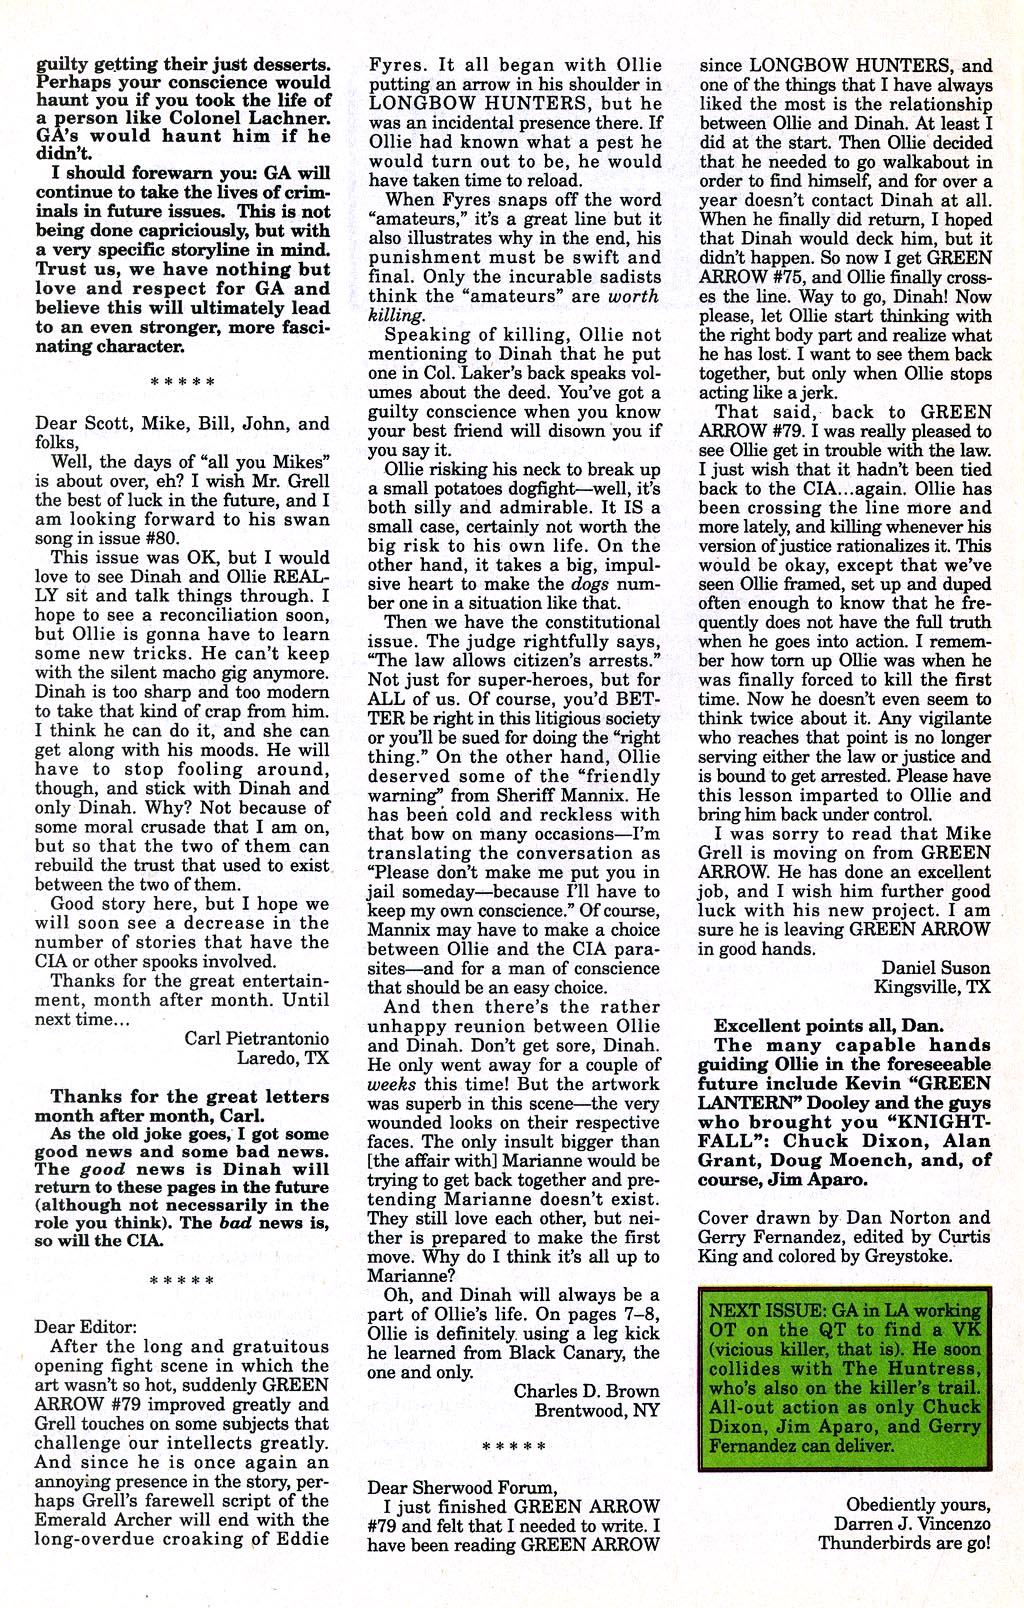 Read online Green Arrow (1988) comic -  Issue #82 - 27